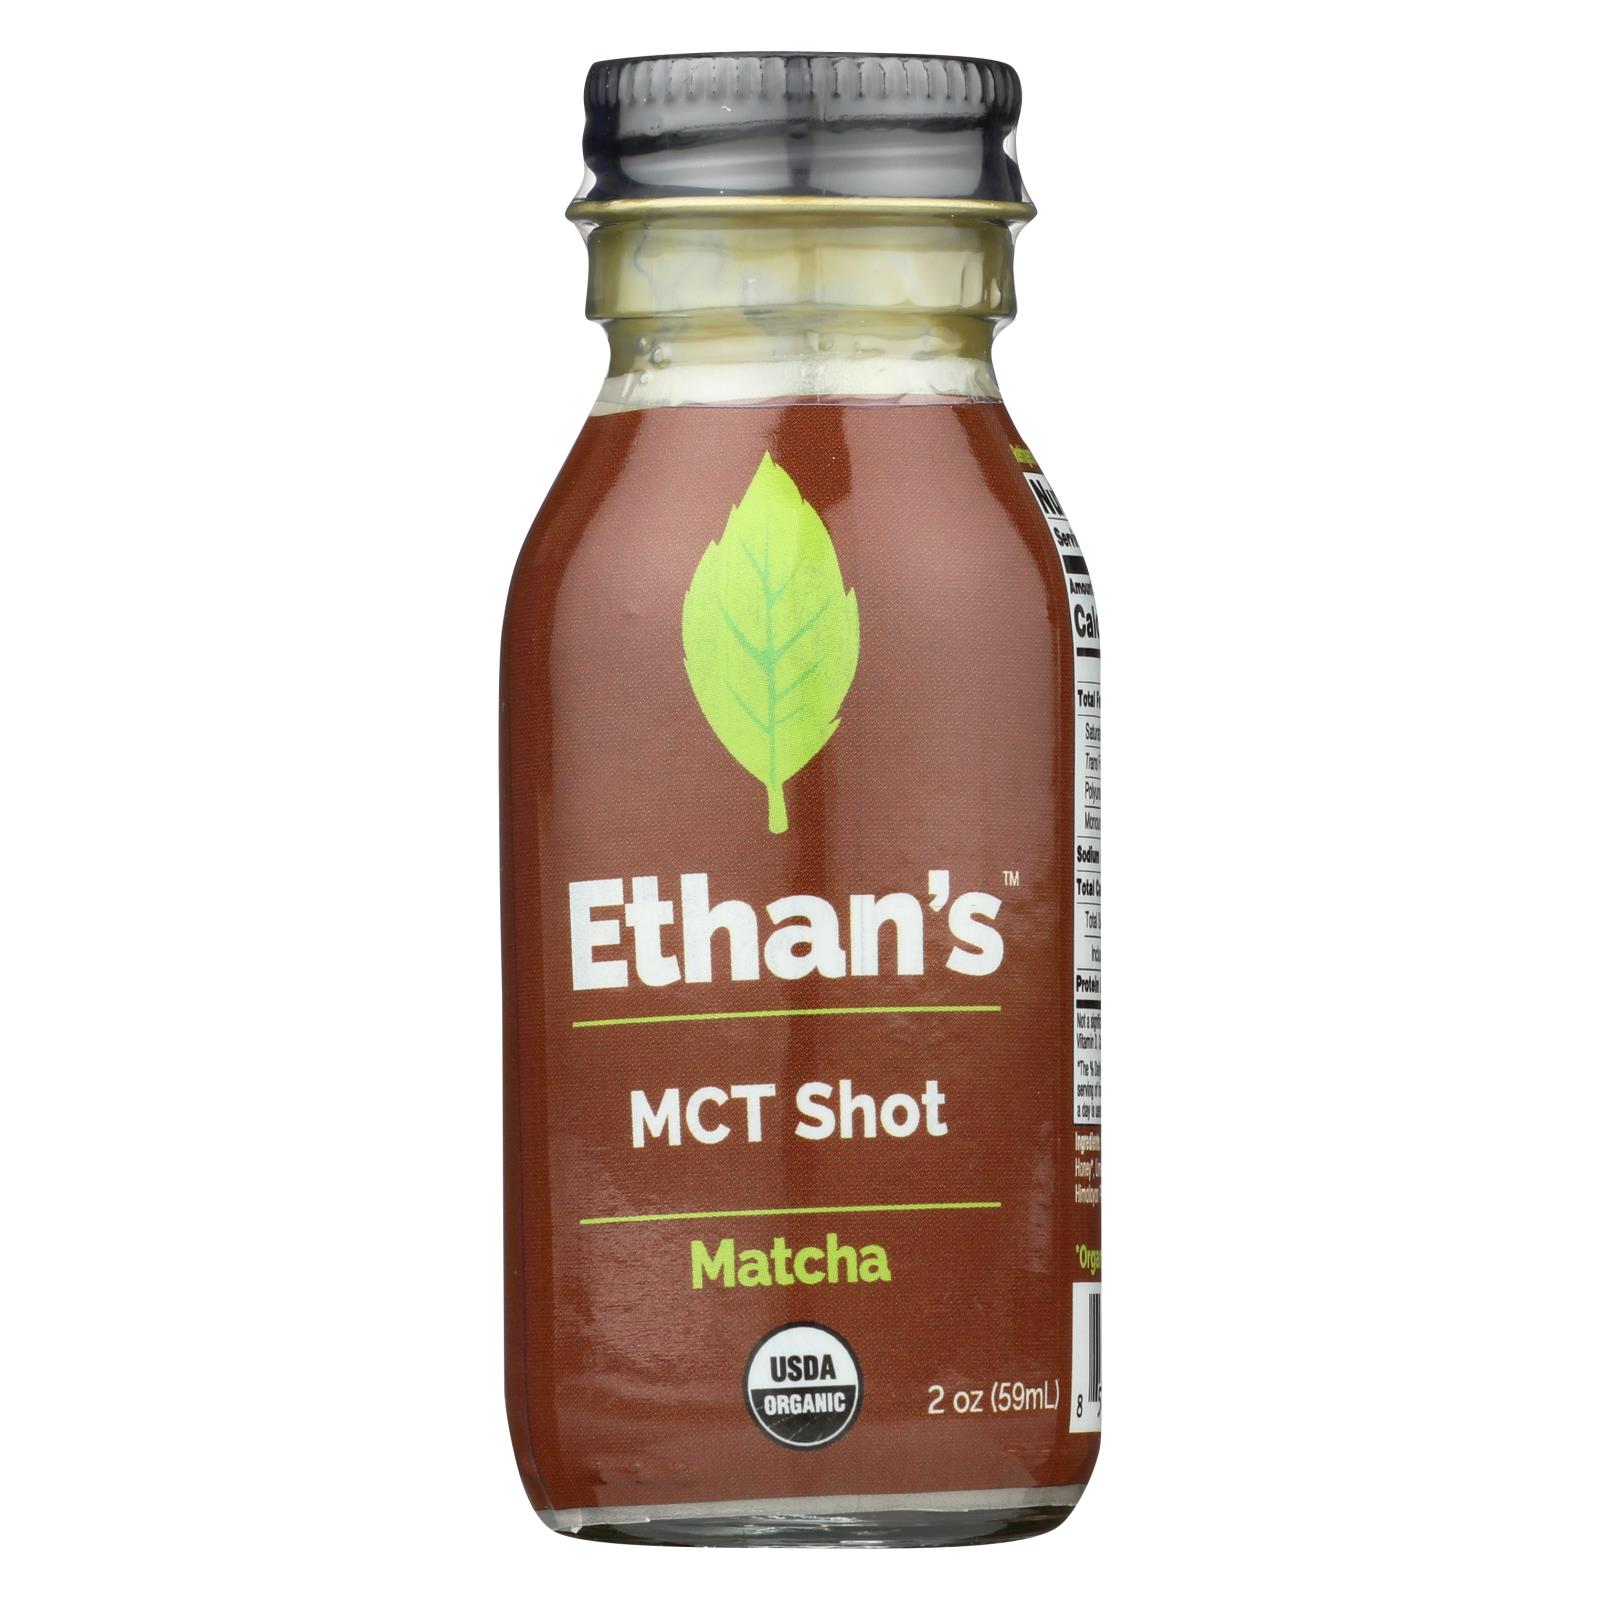 Ethan's - Mct Shot Matcha - Case of 12 - 2 OZ